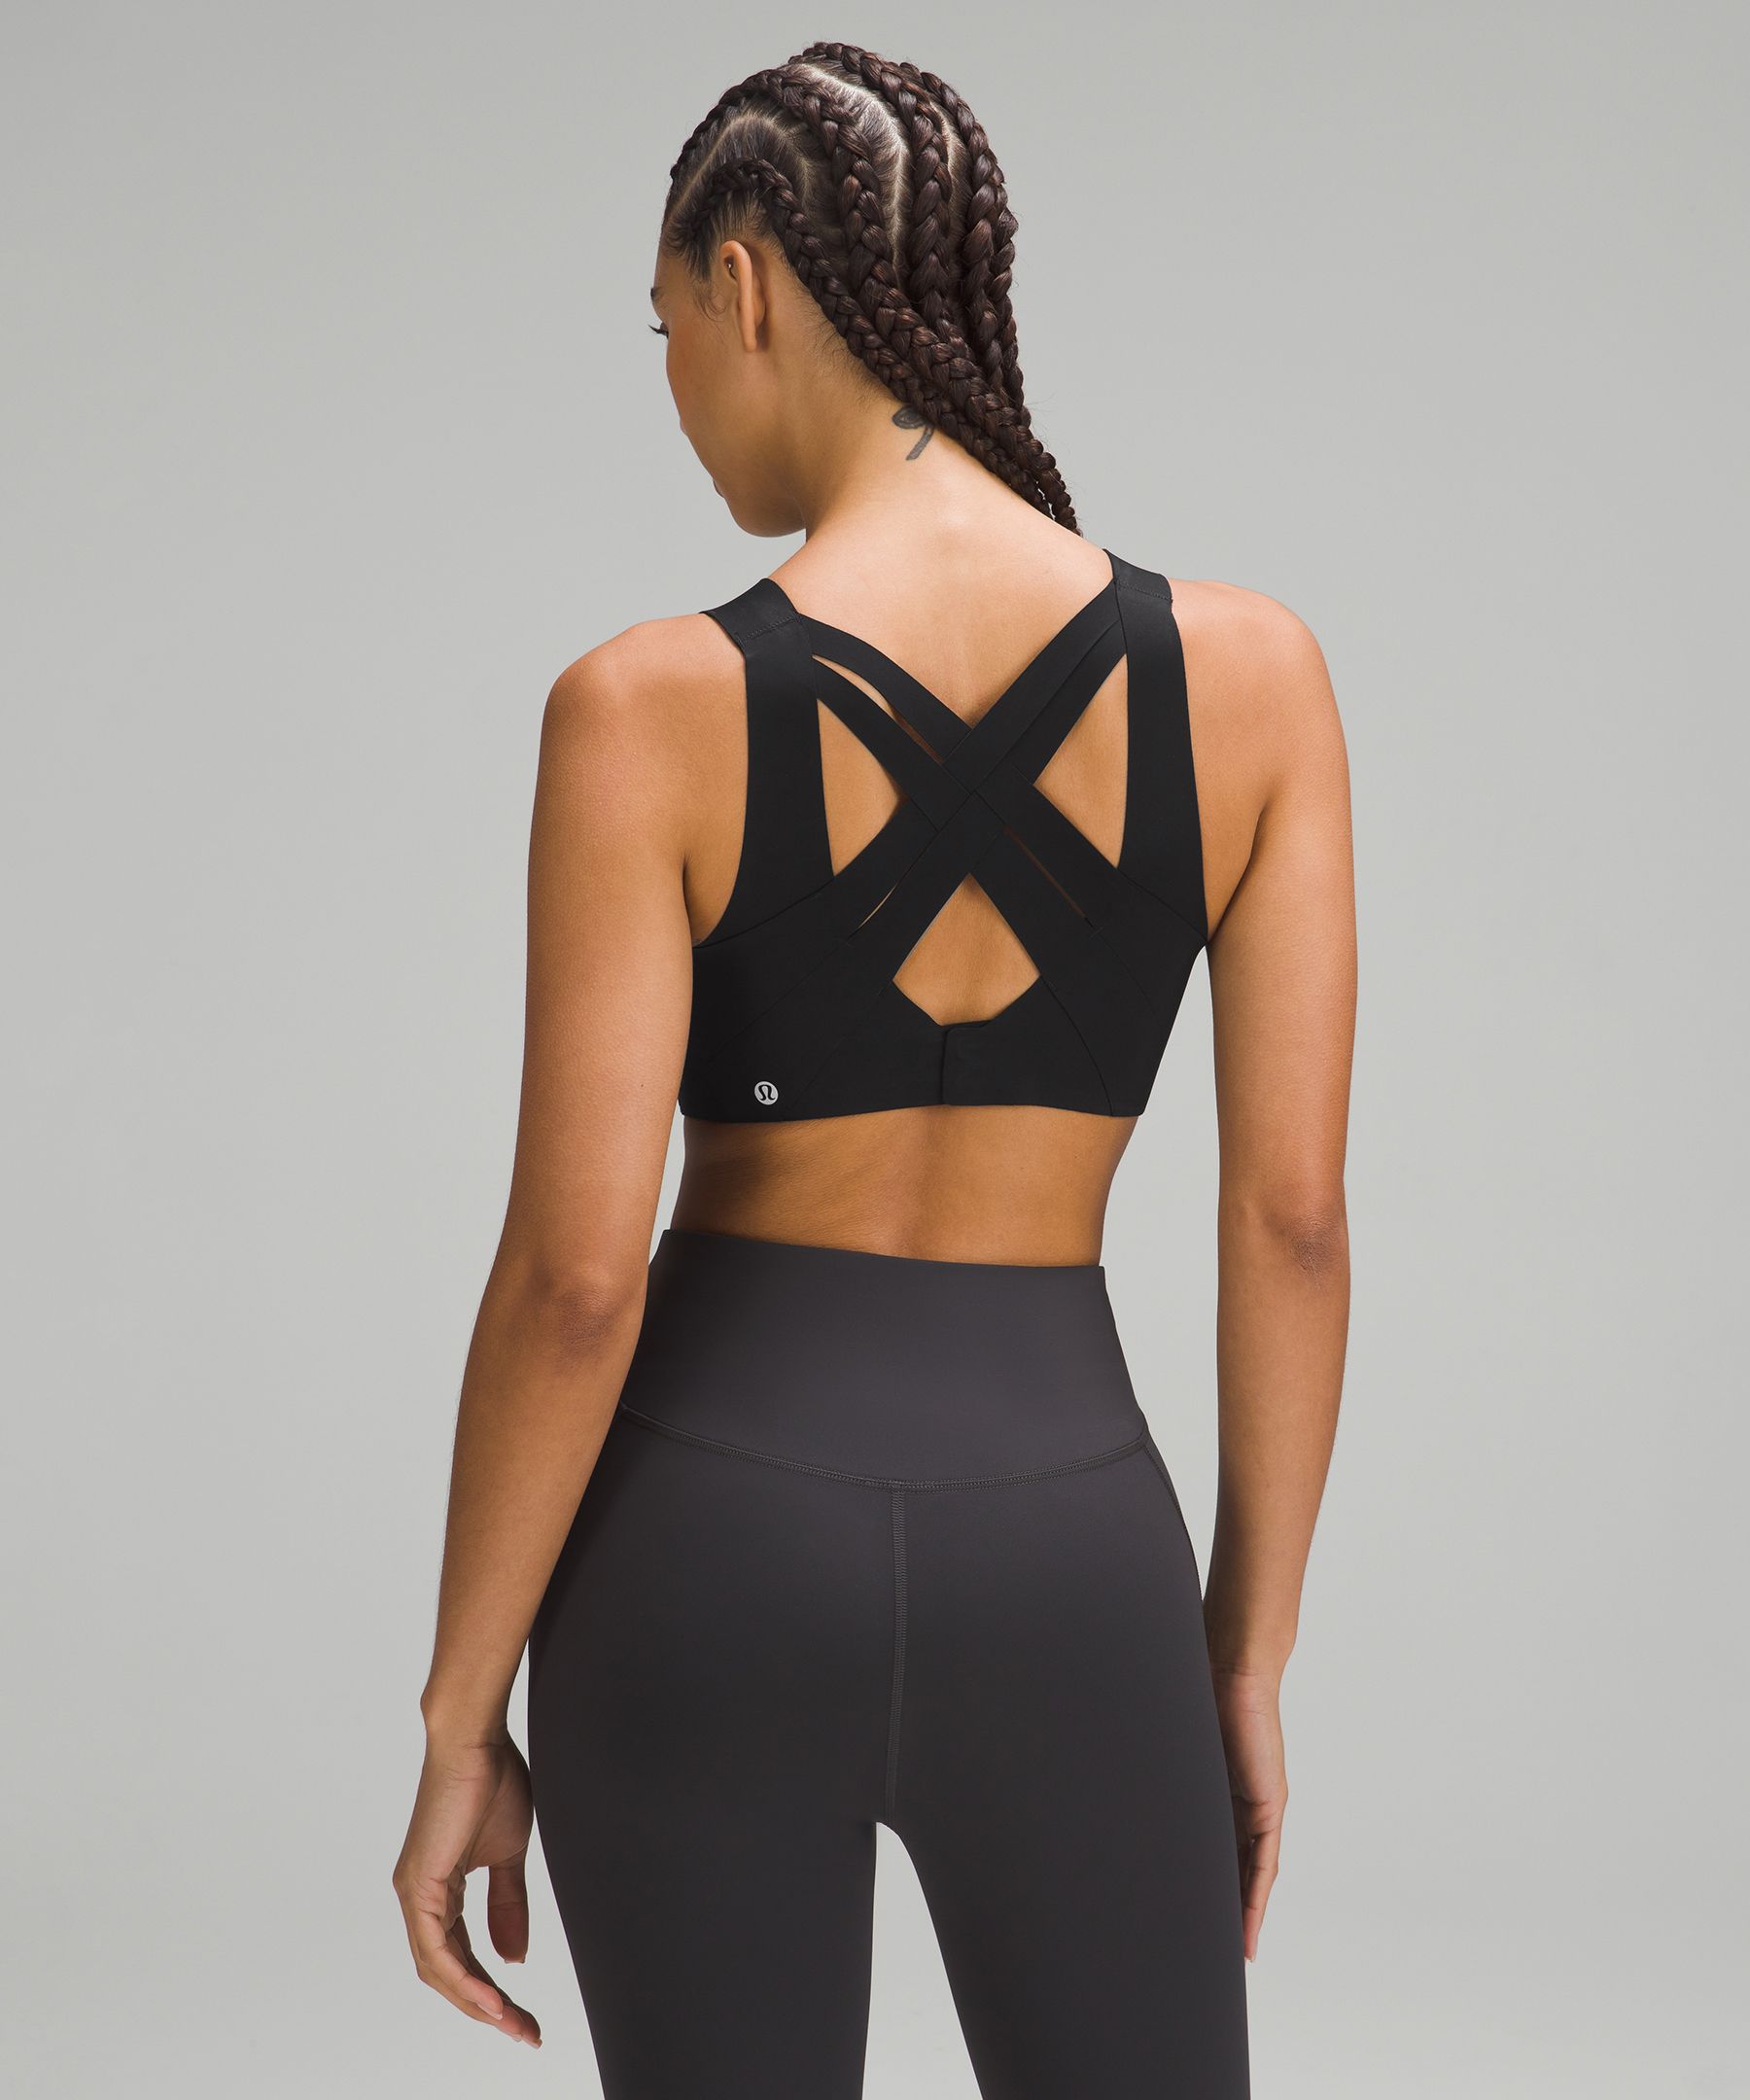 Lululemon Sports Bra Black Size 2 - $20 (47% Off Retail) - From